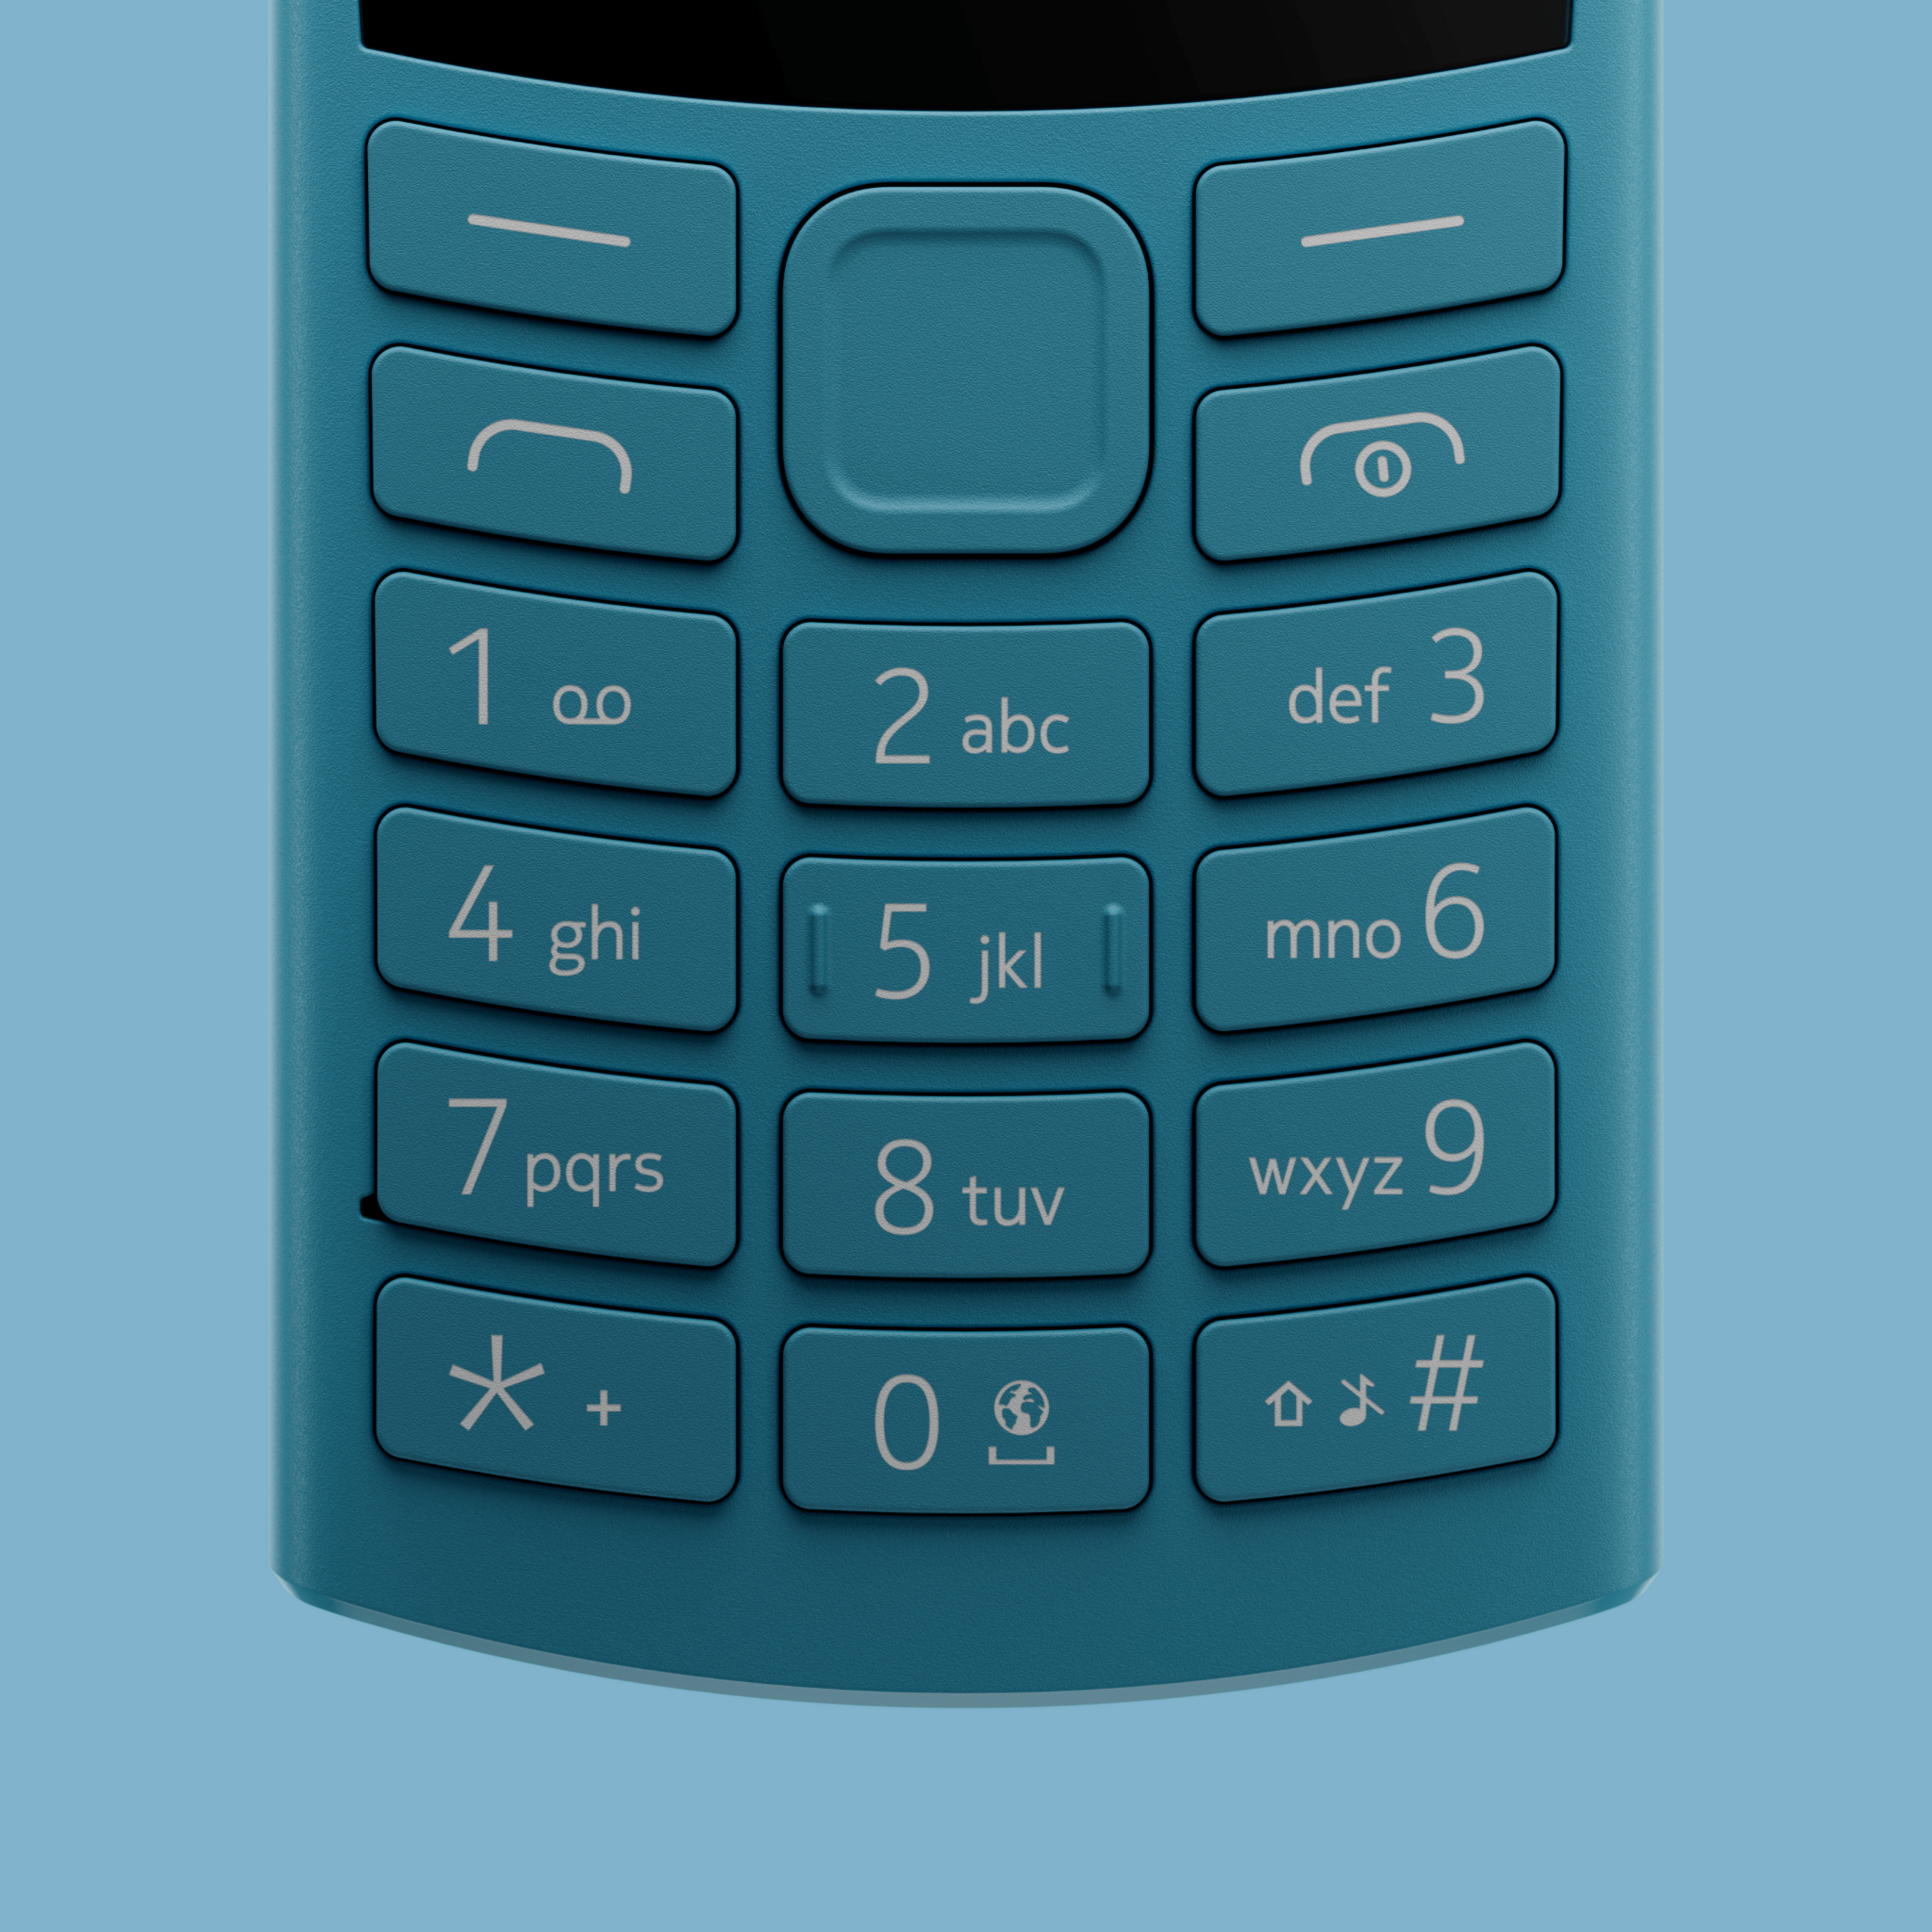 Celular Nokia 105 4G — Market